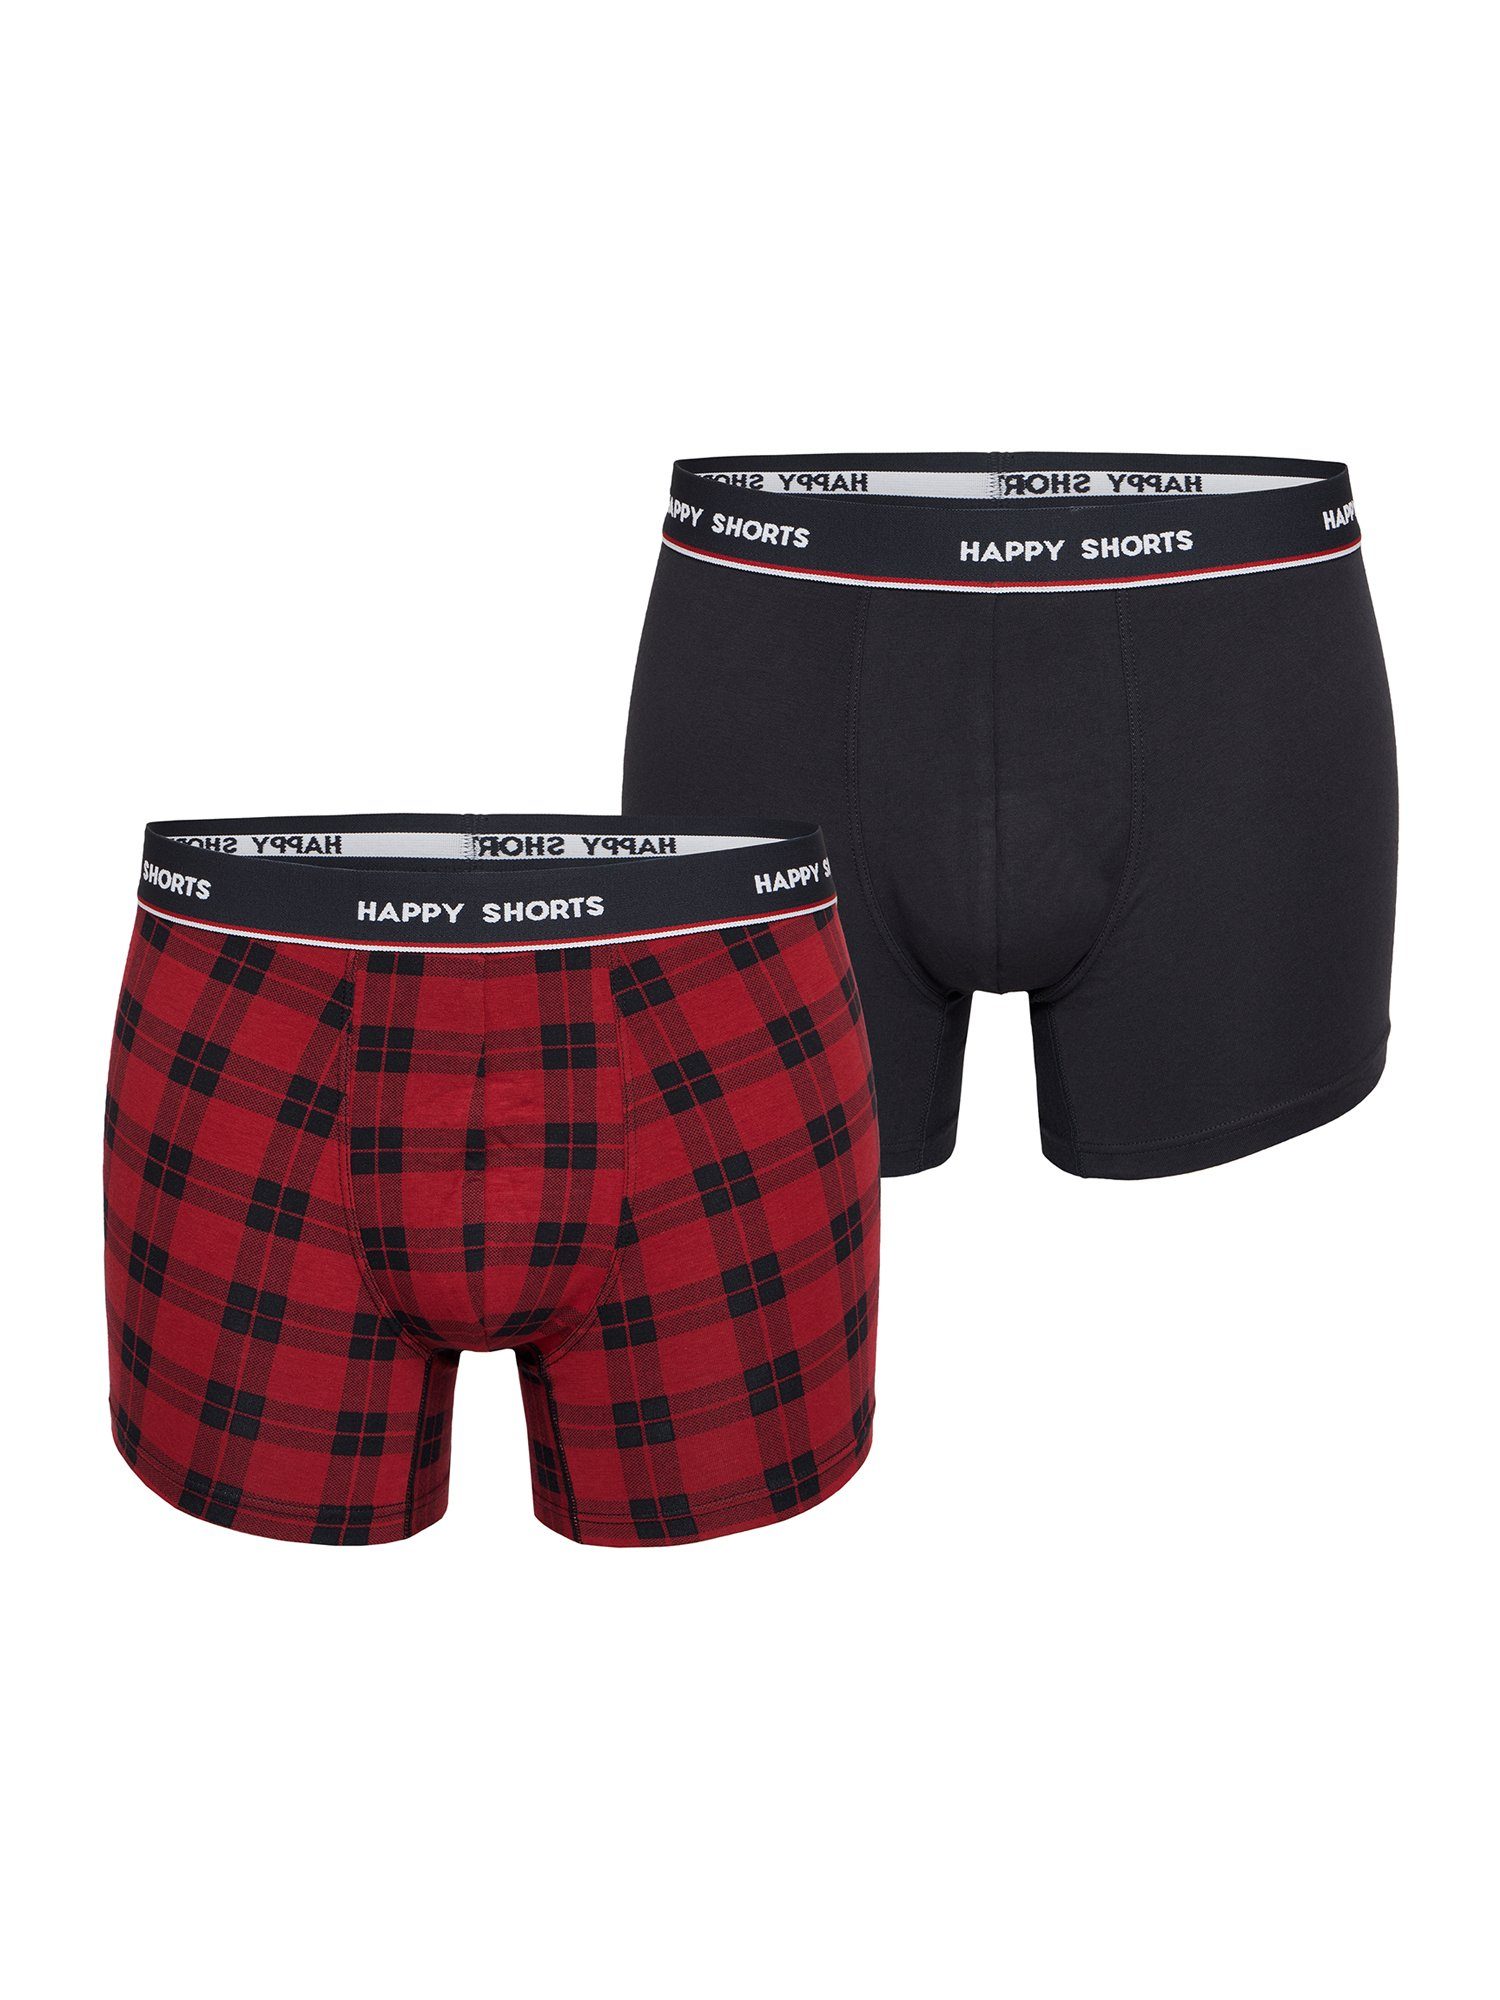 HAPPY SHORTS Retro Pants Trunks (2-St) Retro-Boxer Retro-shorts unterhose Check